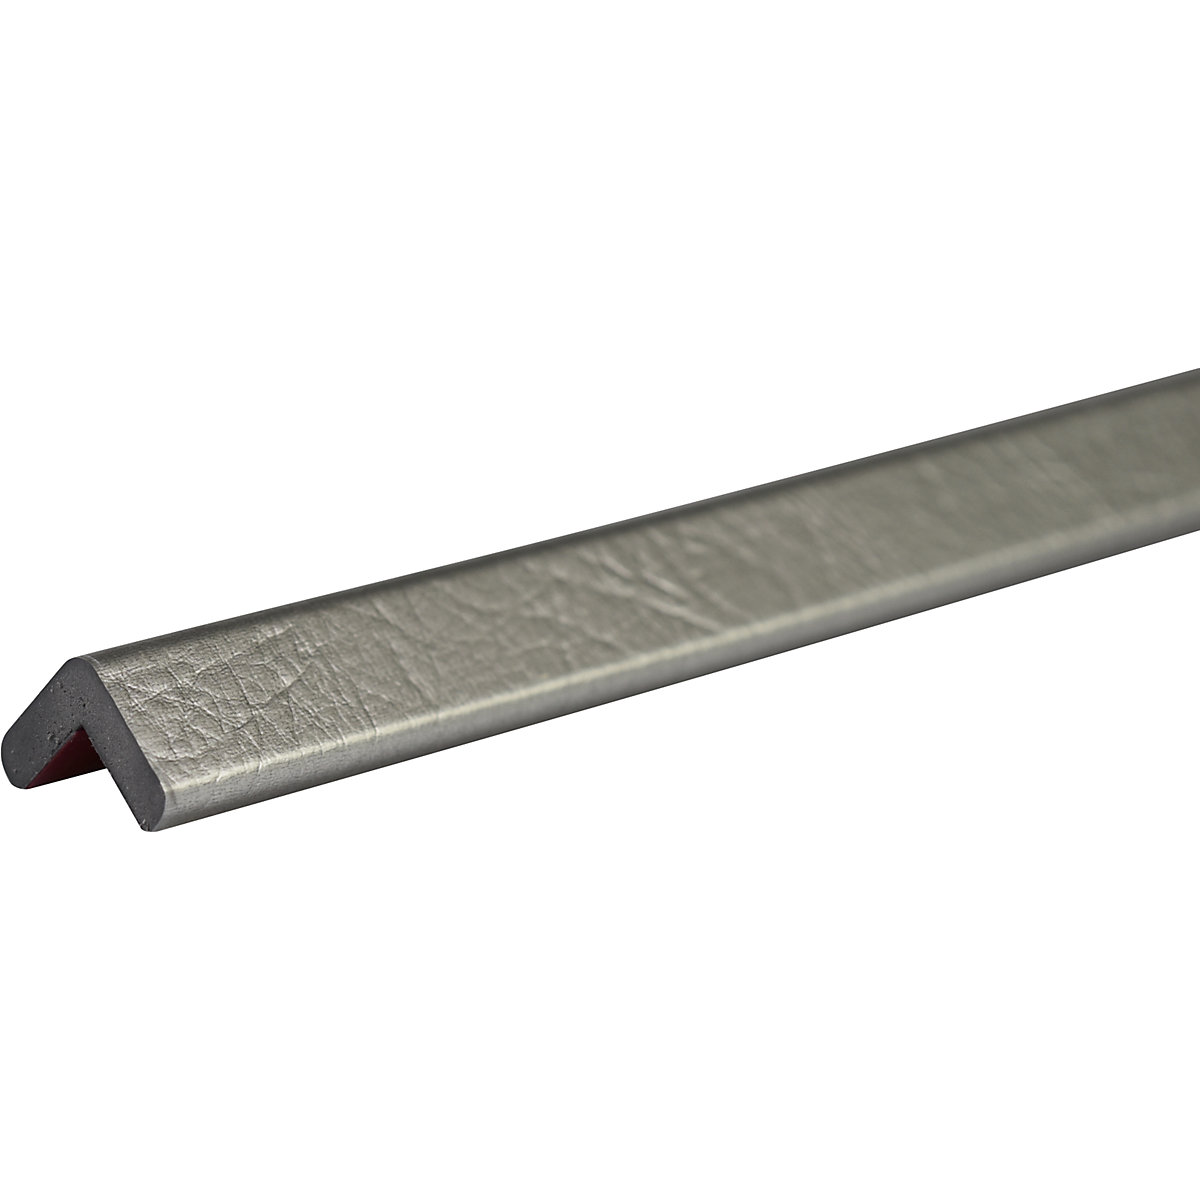 Knuffi®-hoekbescherming – SHG, type E, stuk van 1 m, zilverkleurig-15